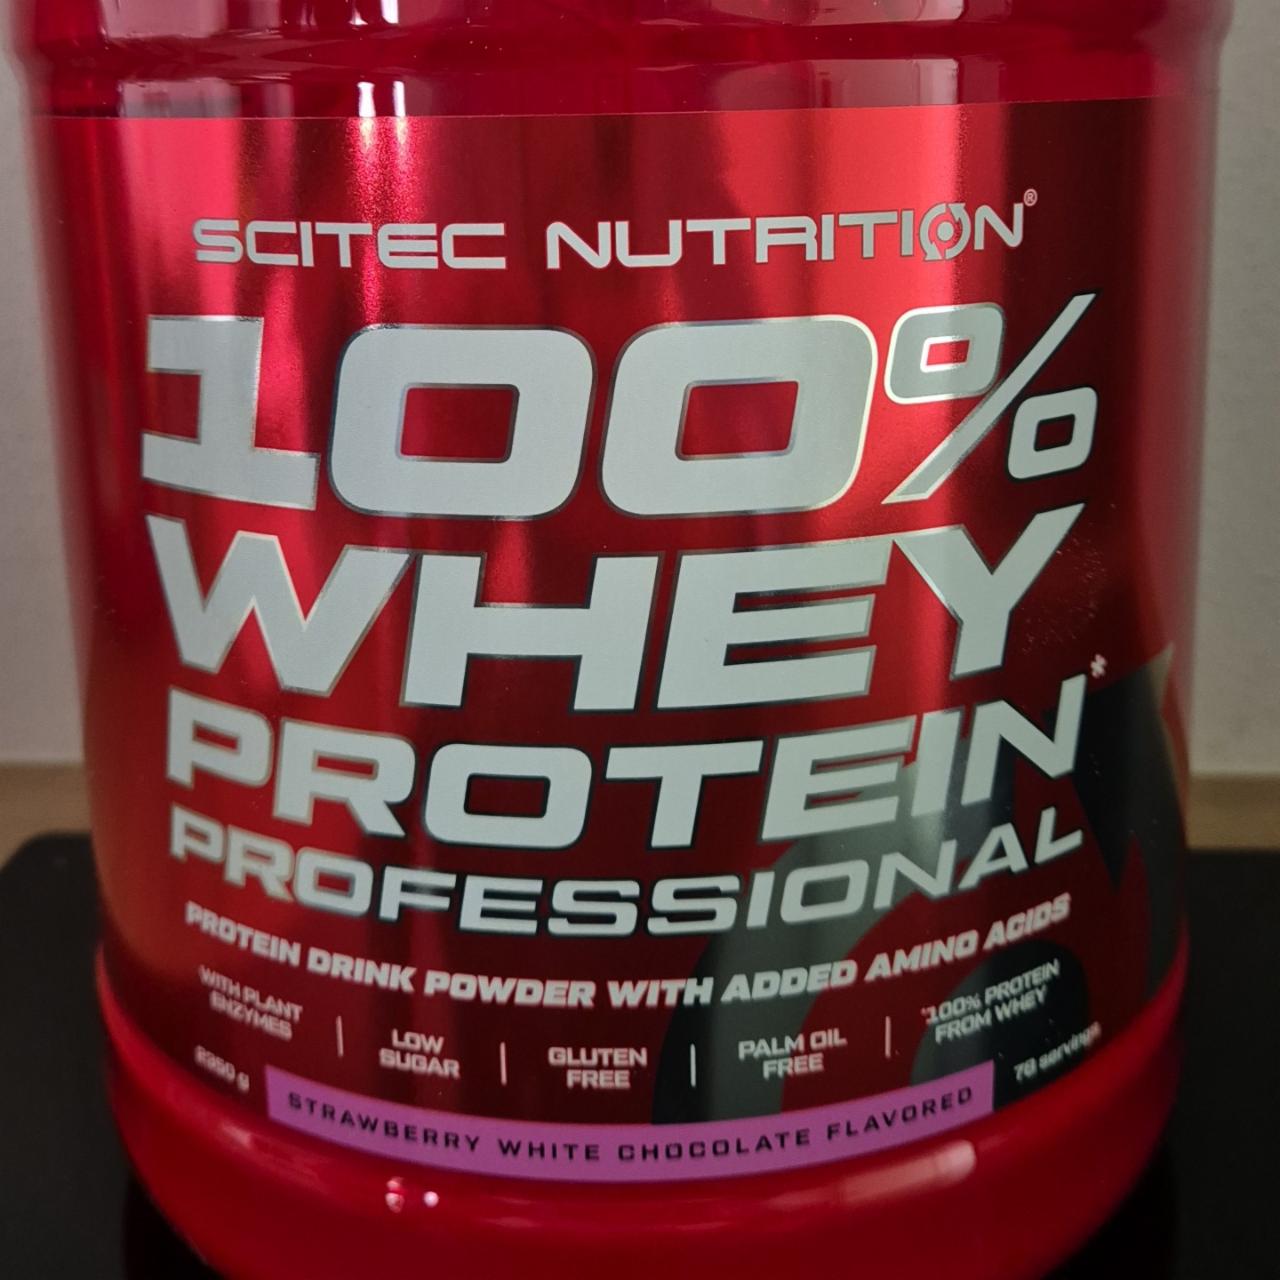 Фото - Протеин со вкусом клубника-белый шоколад Whey Protein Professional Scitec Nutrition